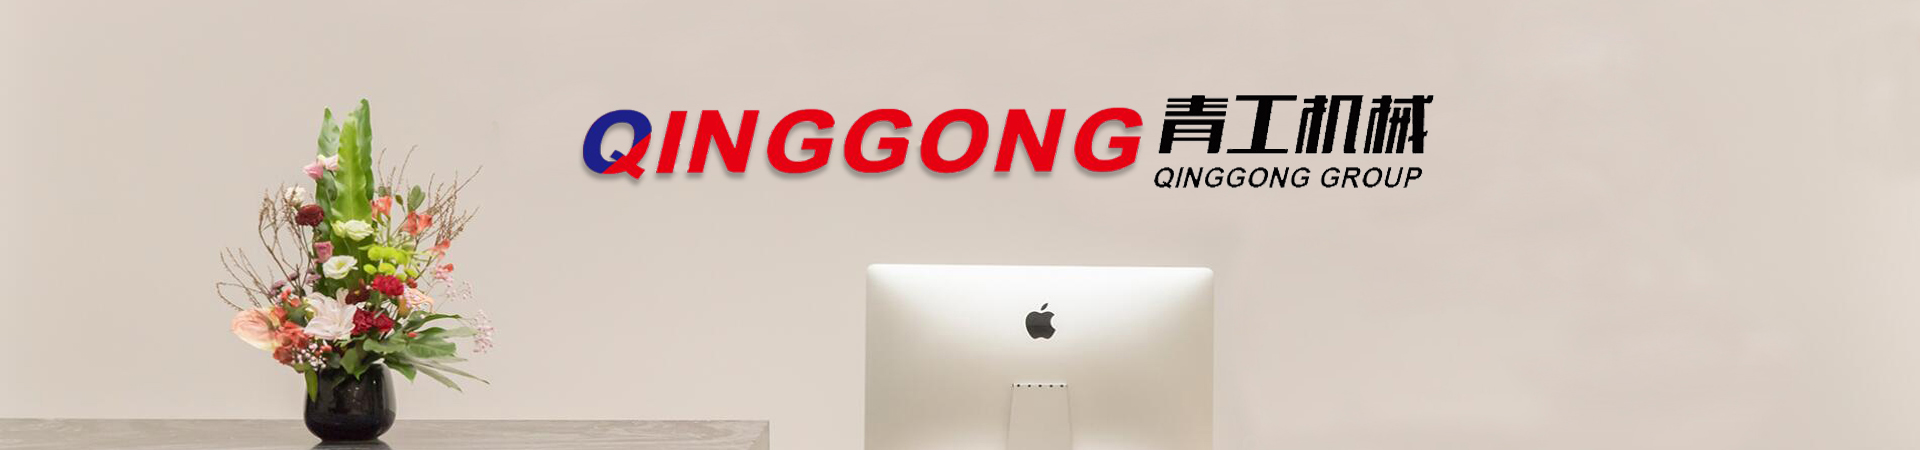 qionggong company banner